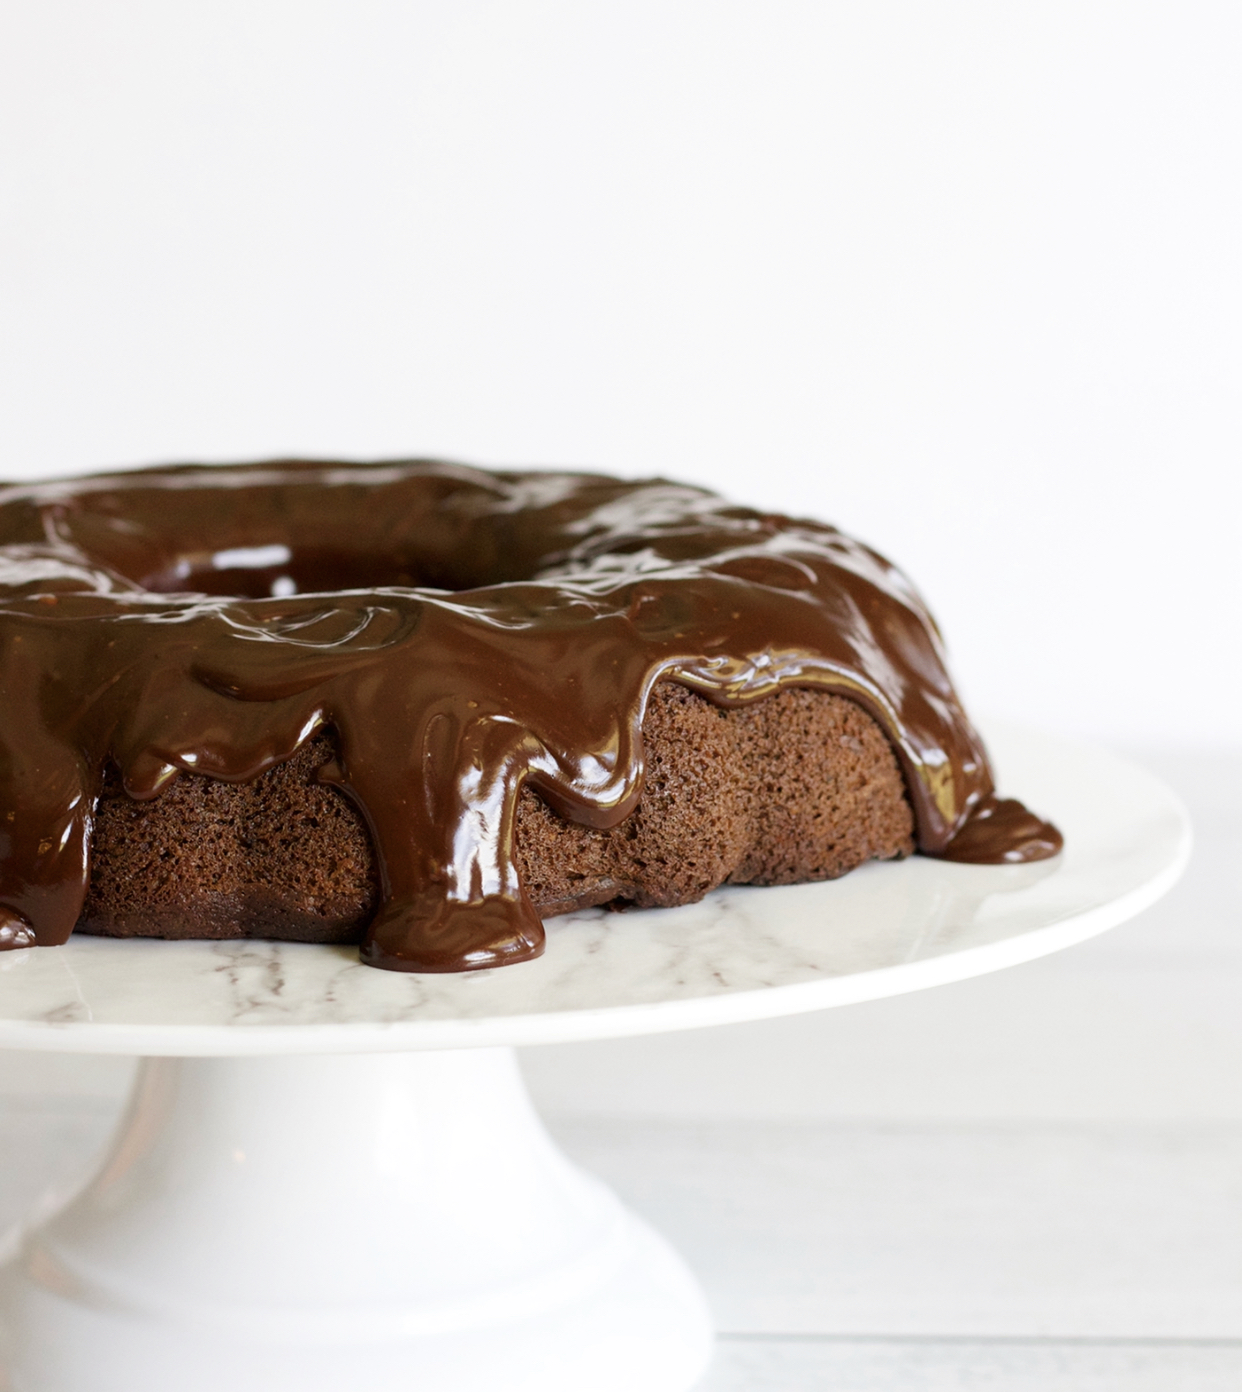 Chocolate cake with chocolate ganache on a white cake stand.